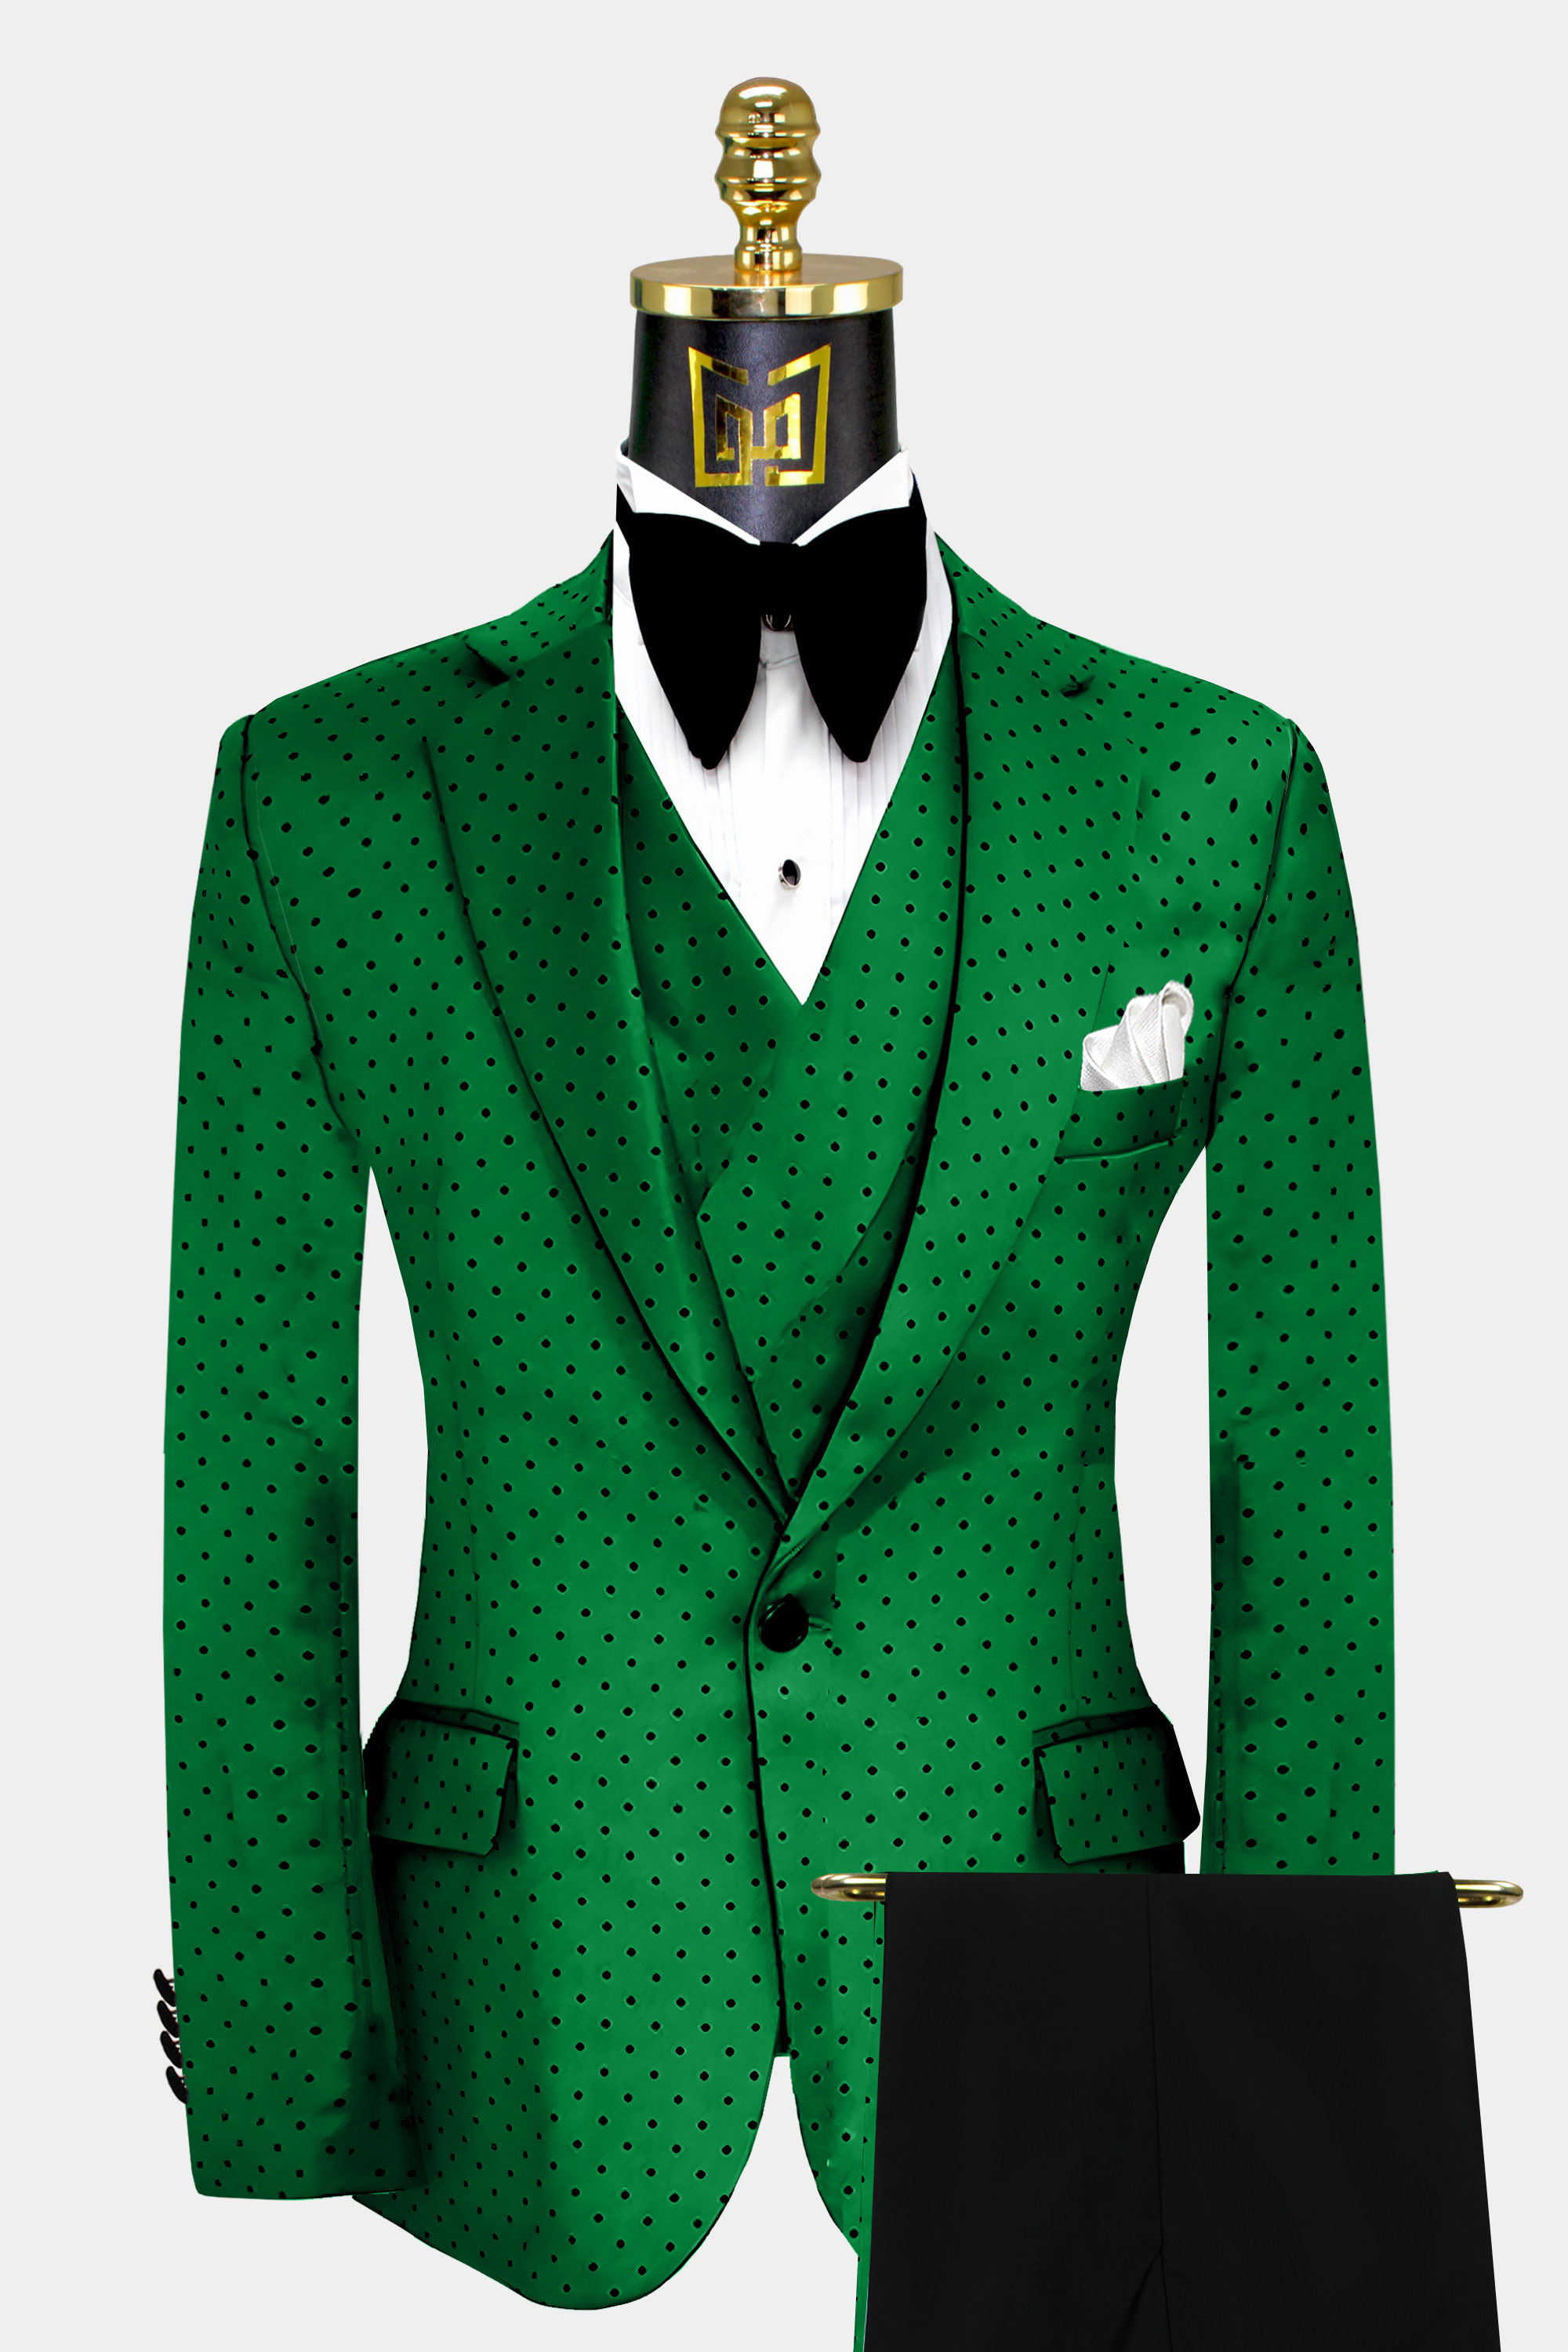 Mens-Black-and-Green-Polka-Dot-Wedding-Groom-Suit-from-Gentlemansguru.com